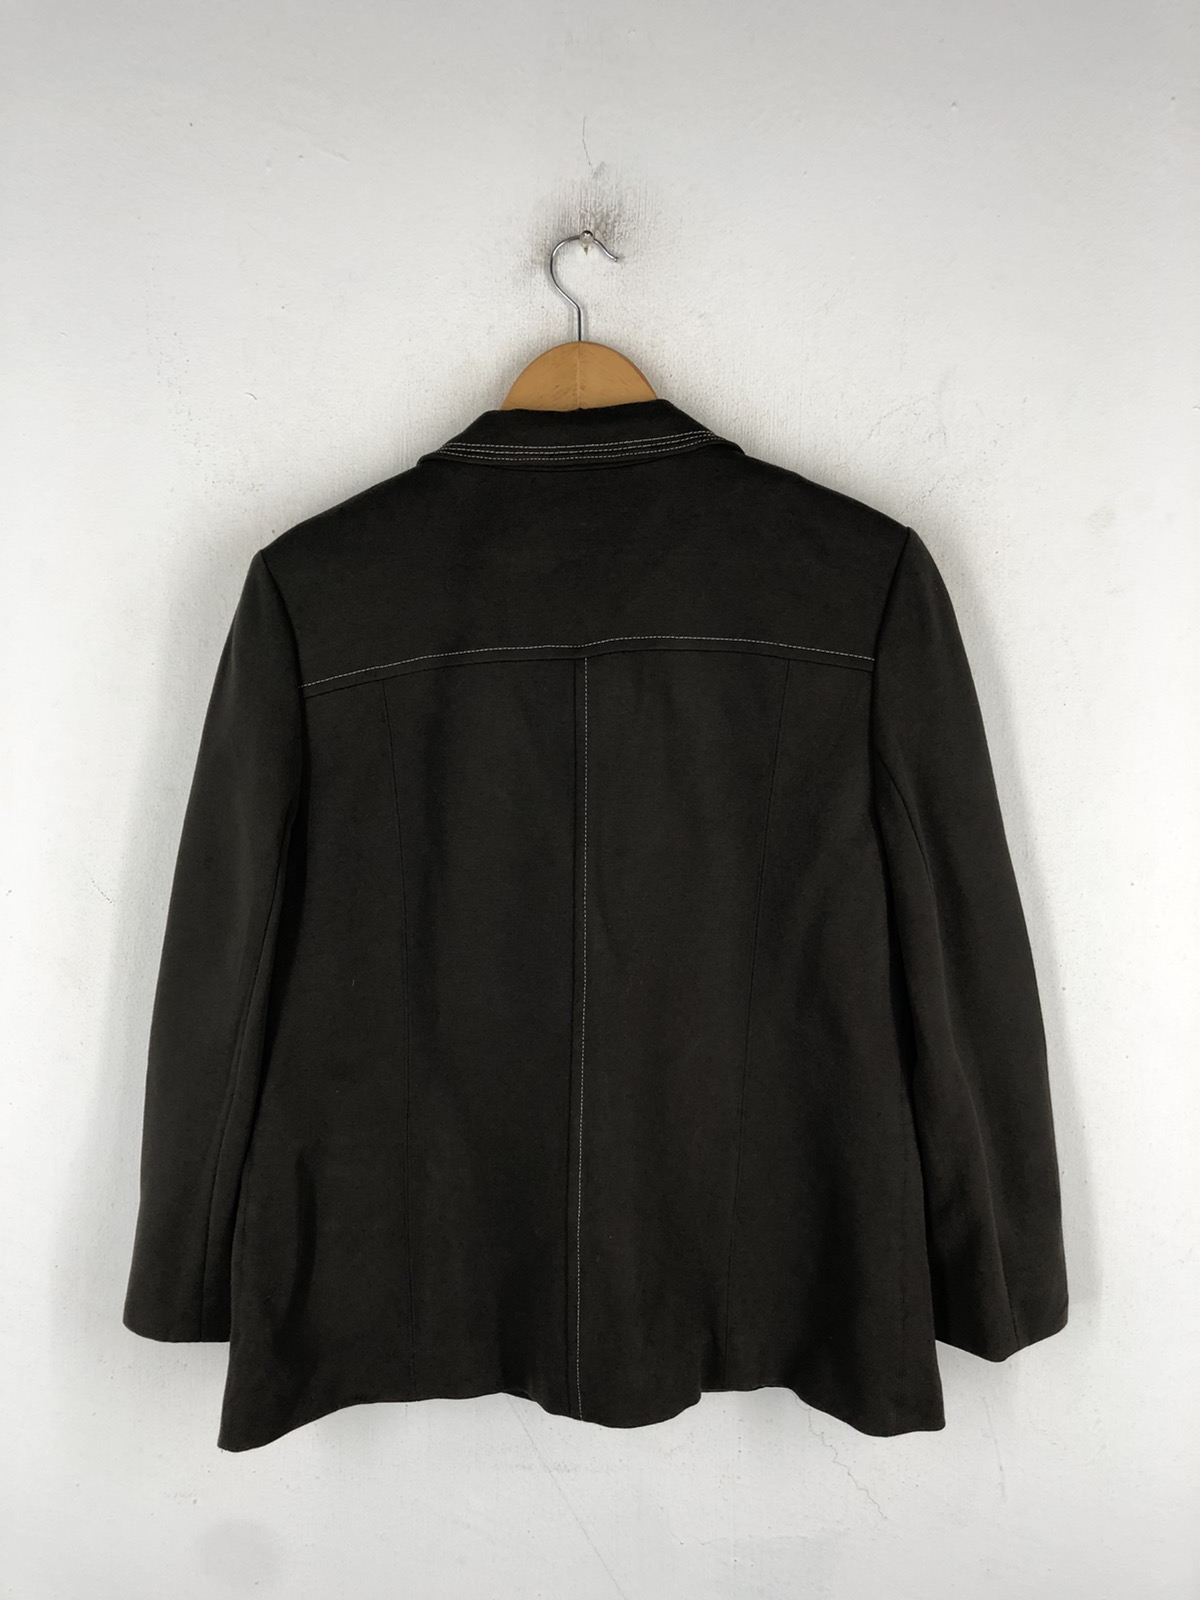 Carven noble jacket - 7